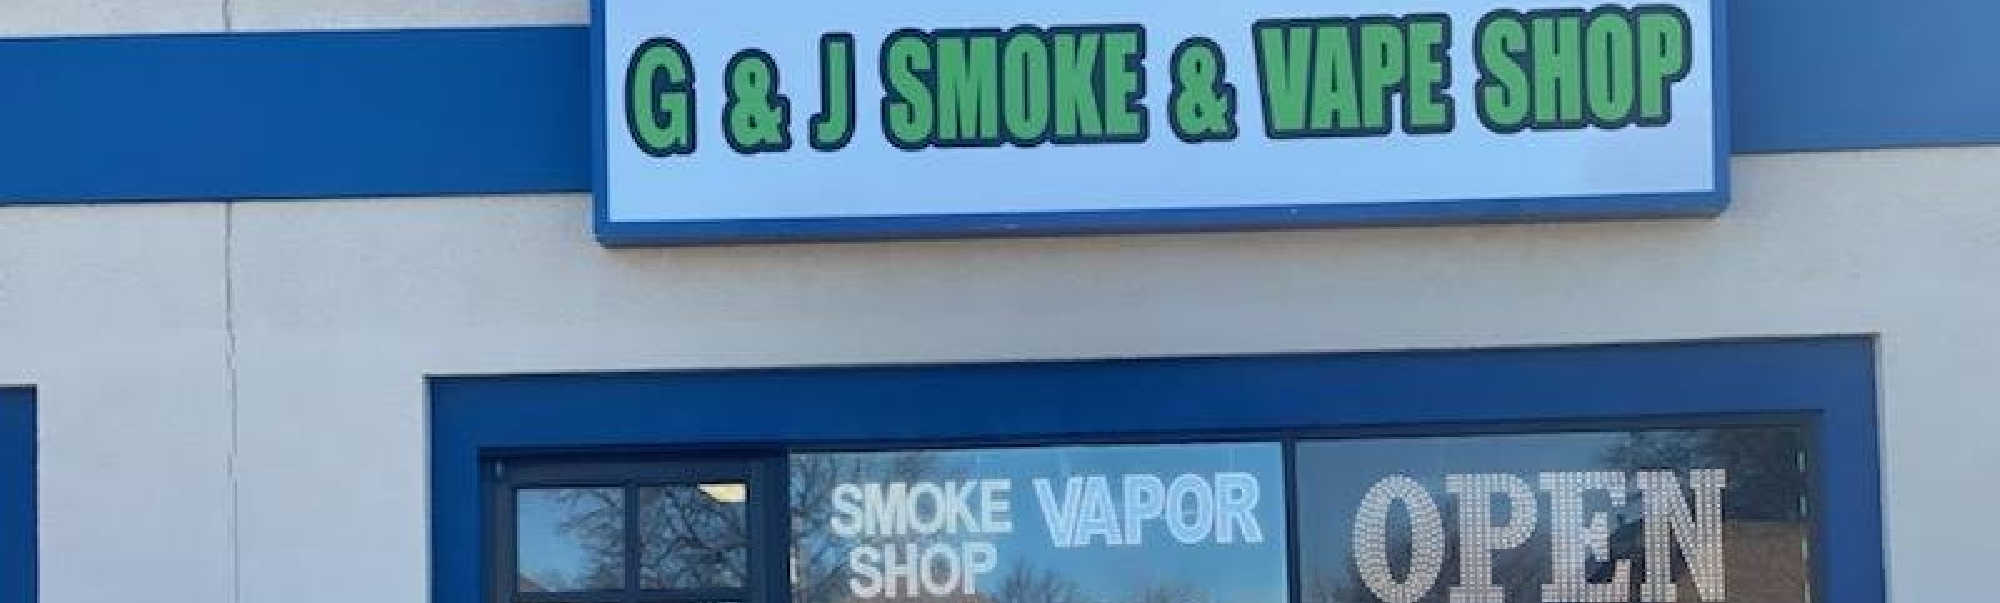 image of g&j smoke & vape shop in lincoln ne